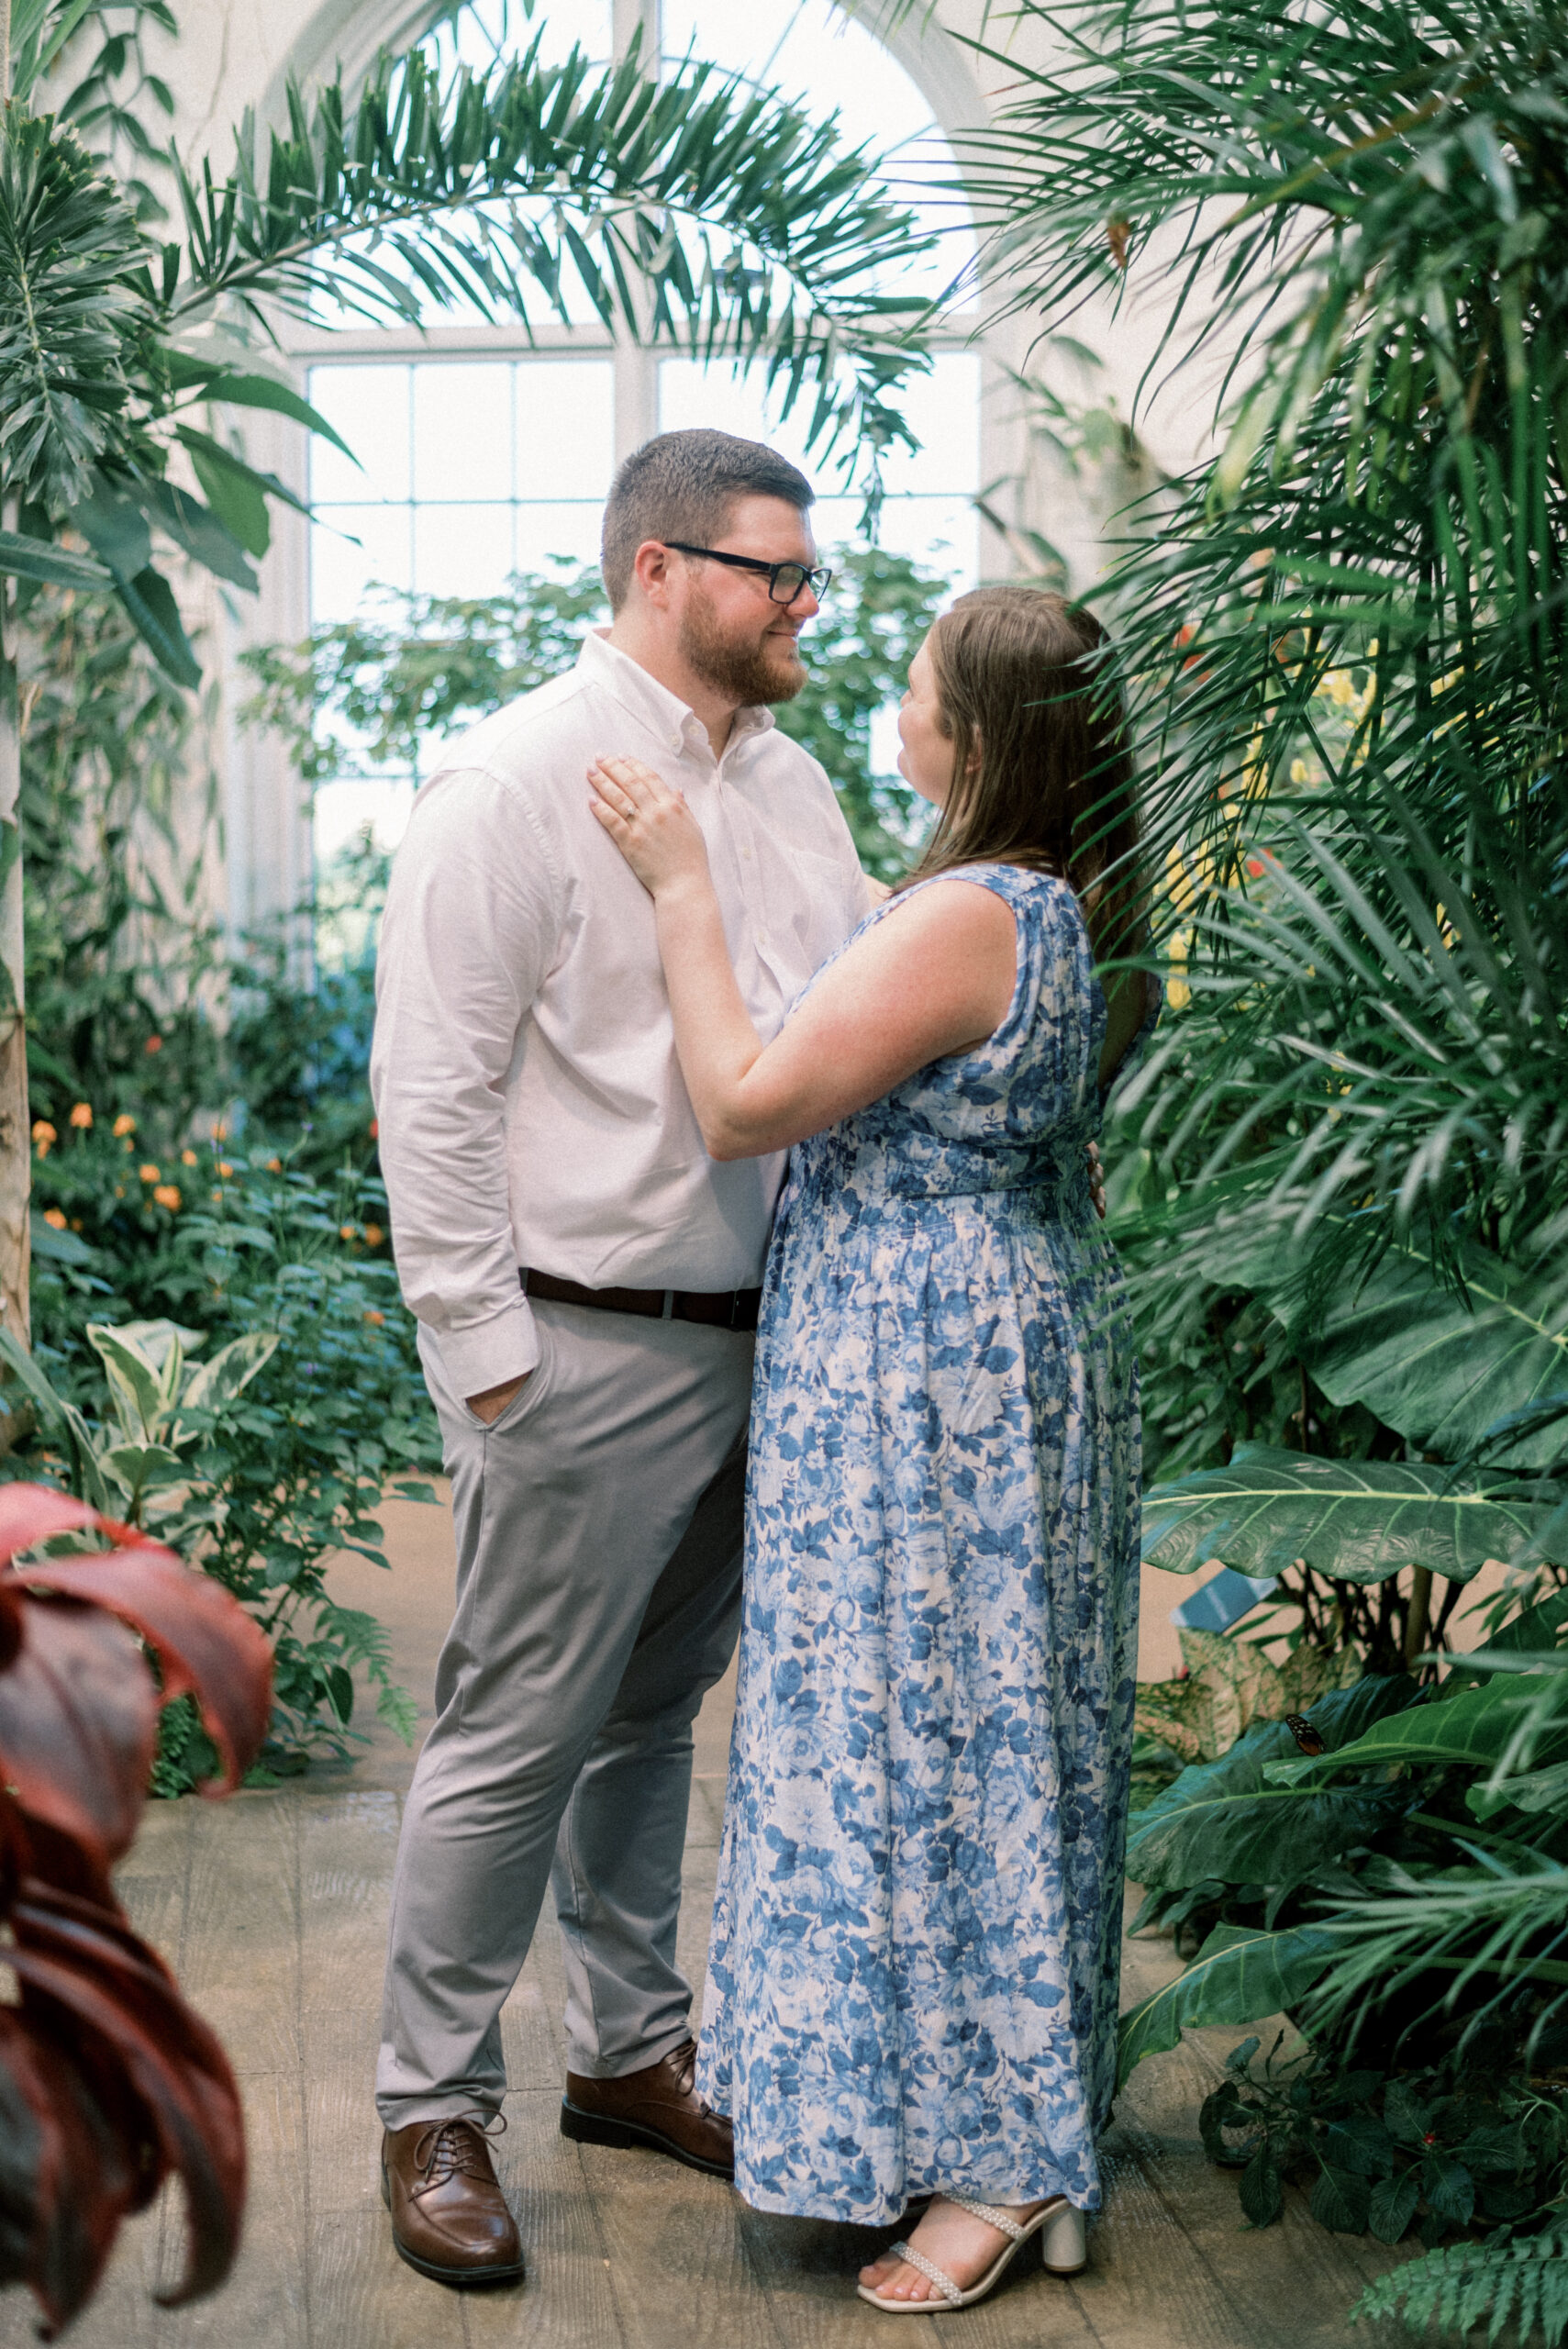 Engagement Portraits at Hershey Gardens